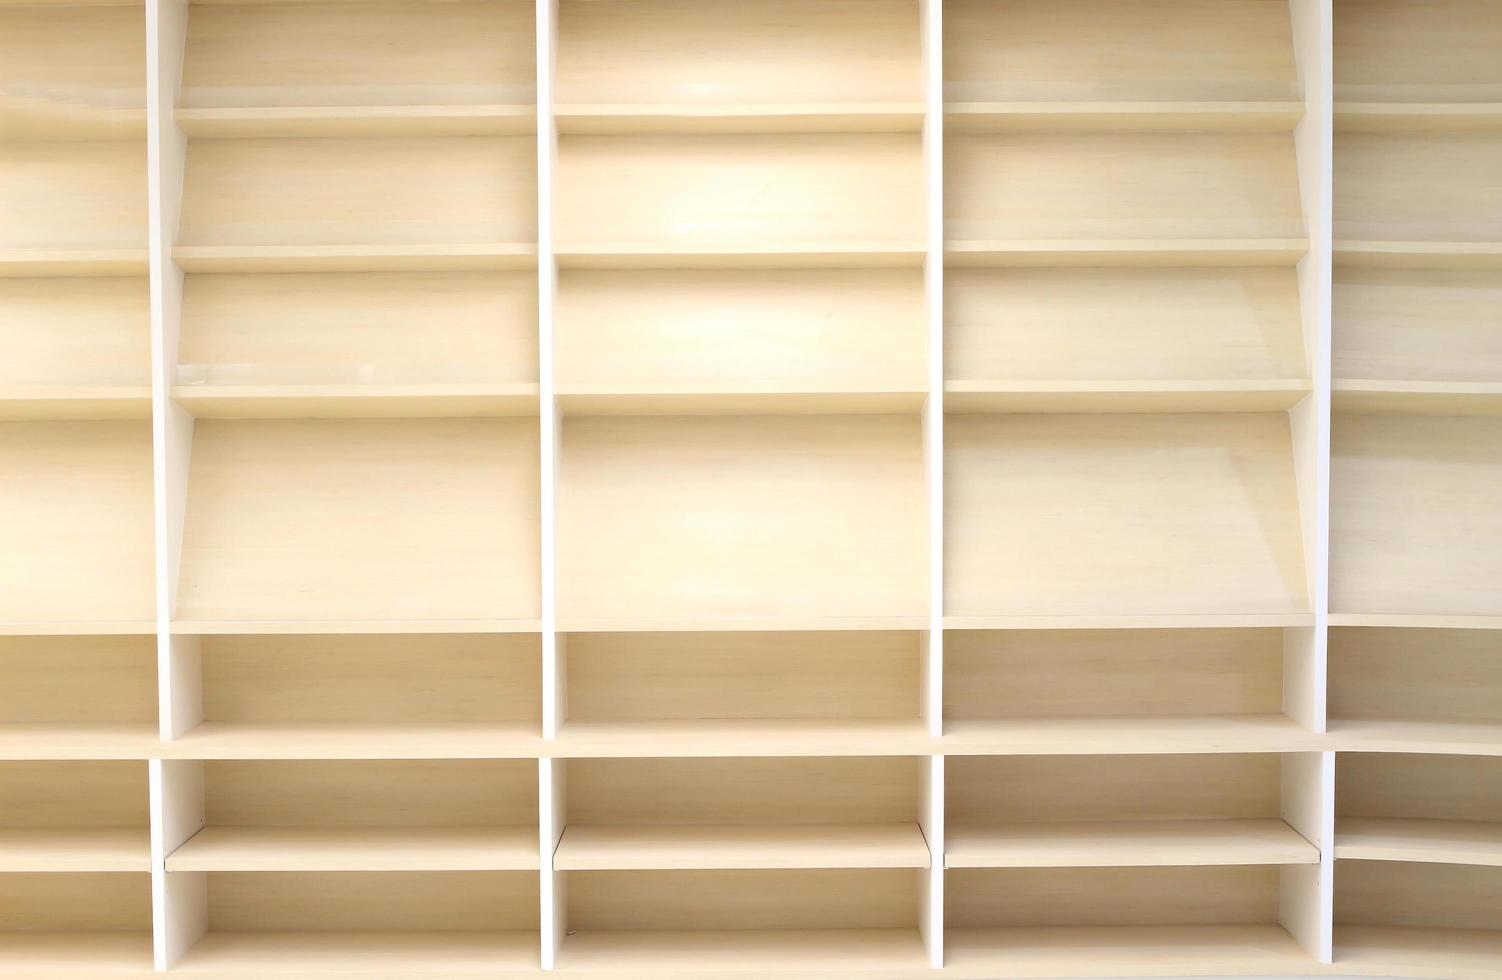 Blank wooden bookshelf photo